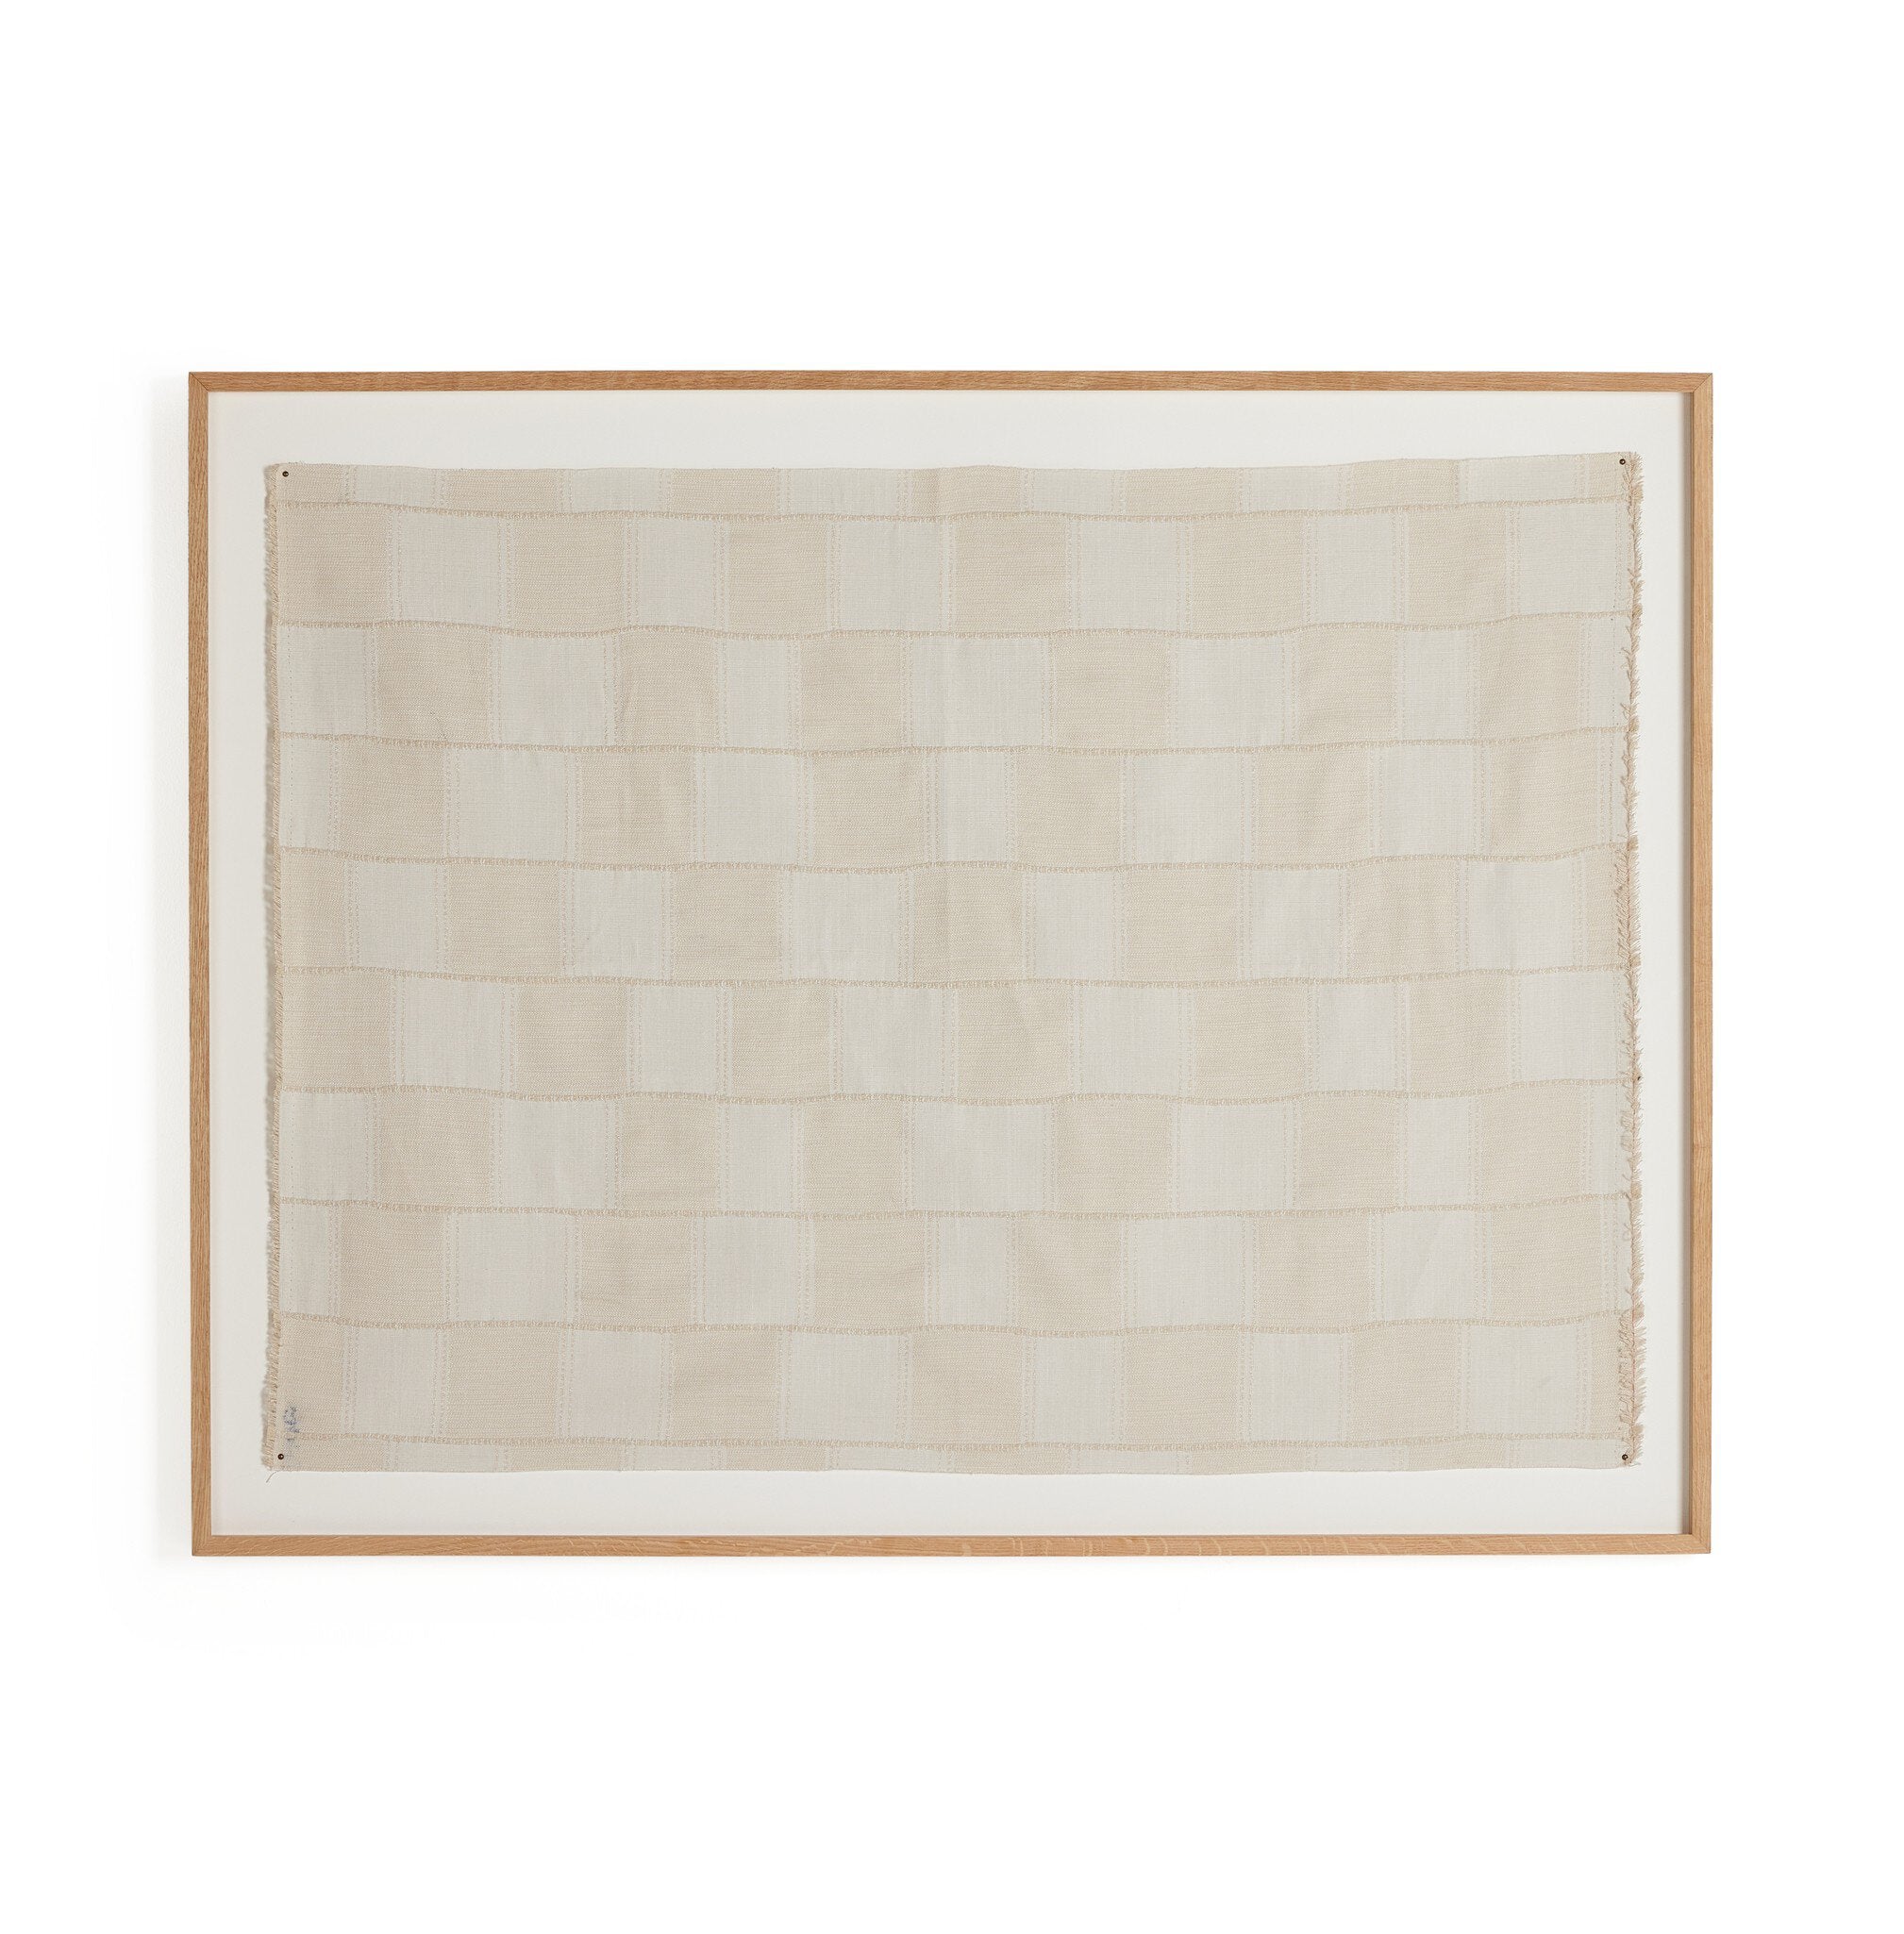 Thomwell Woven Textile by FH Art Studio - Vertical Grain 2.5 White Oak